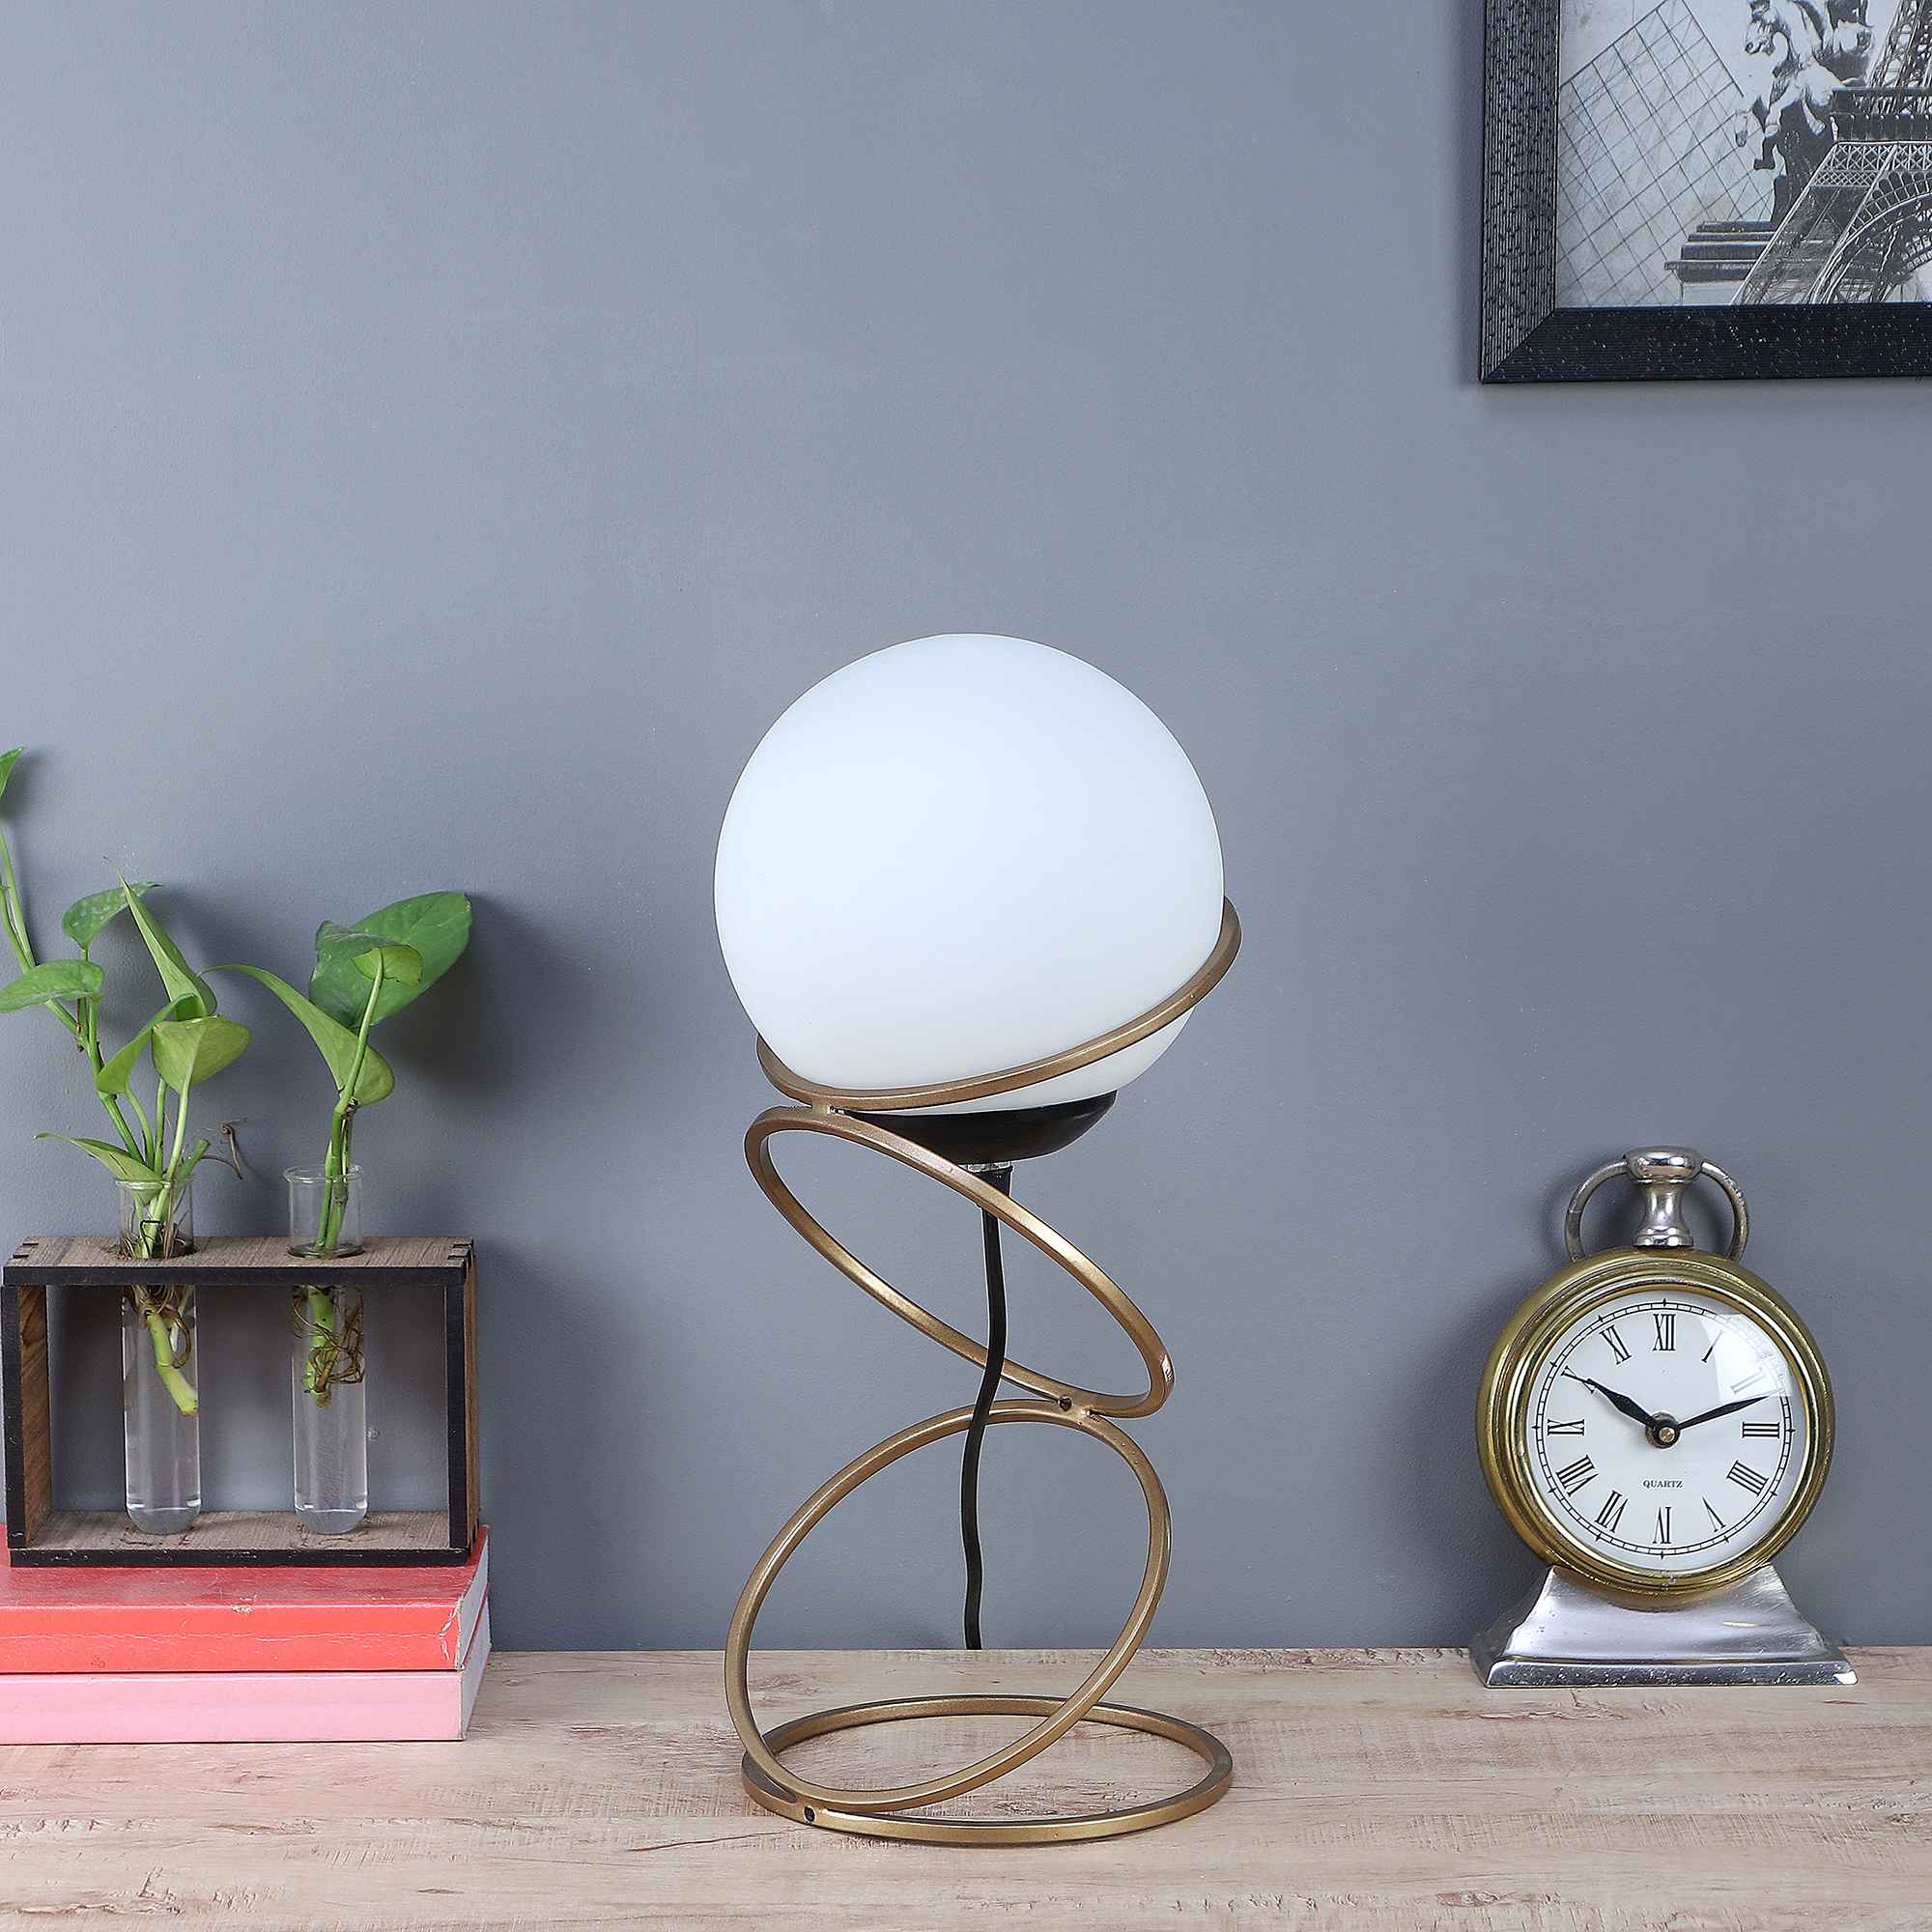 Designer Study Lamp With Metal Base